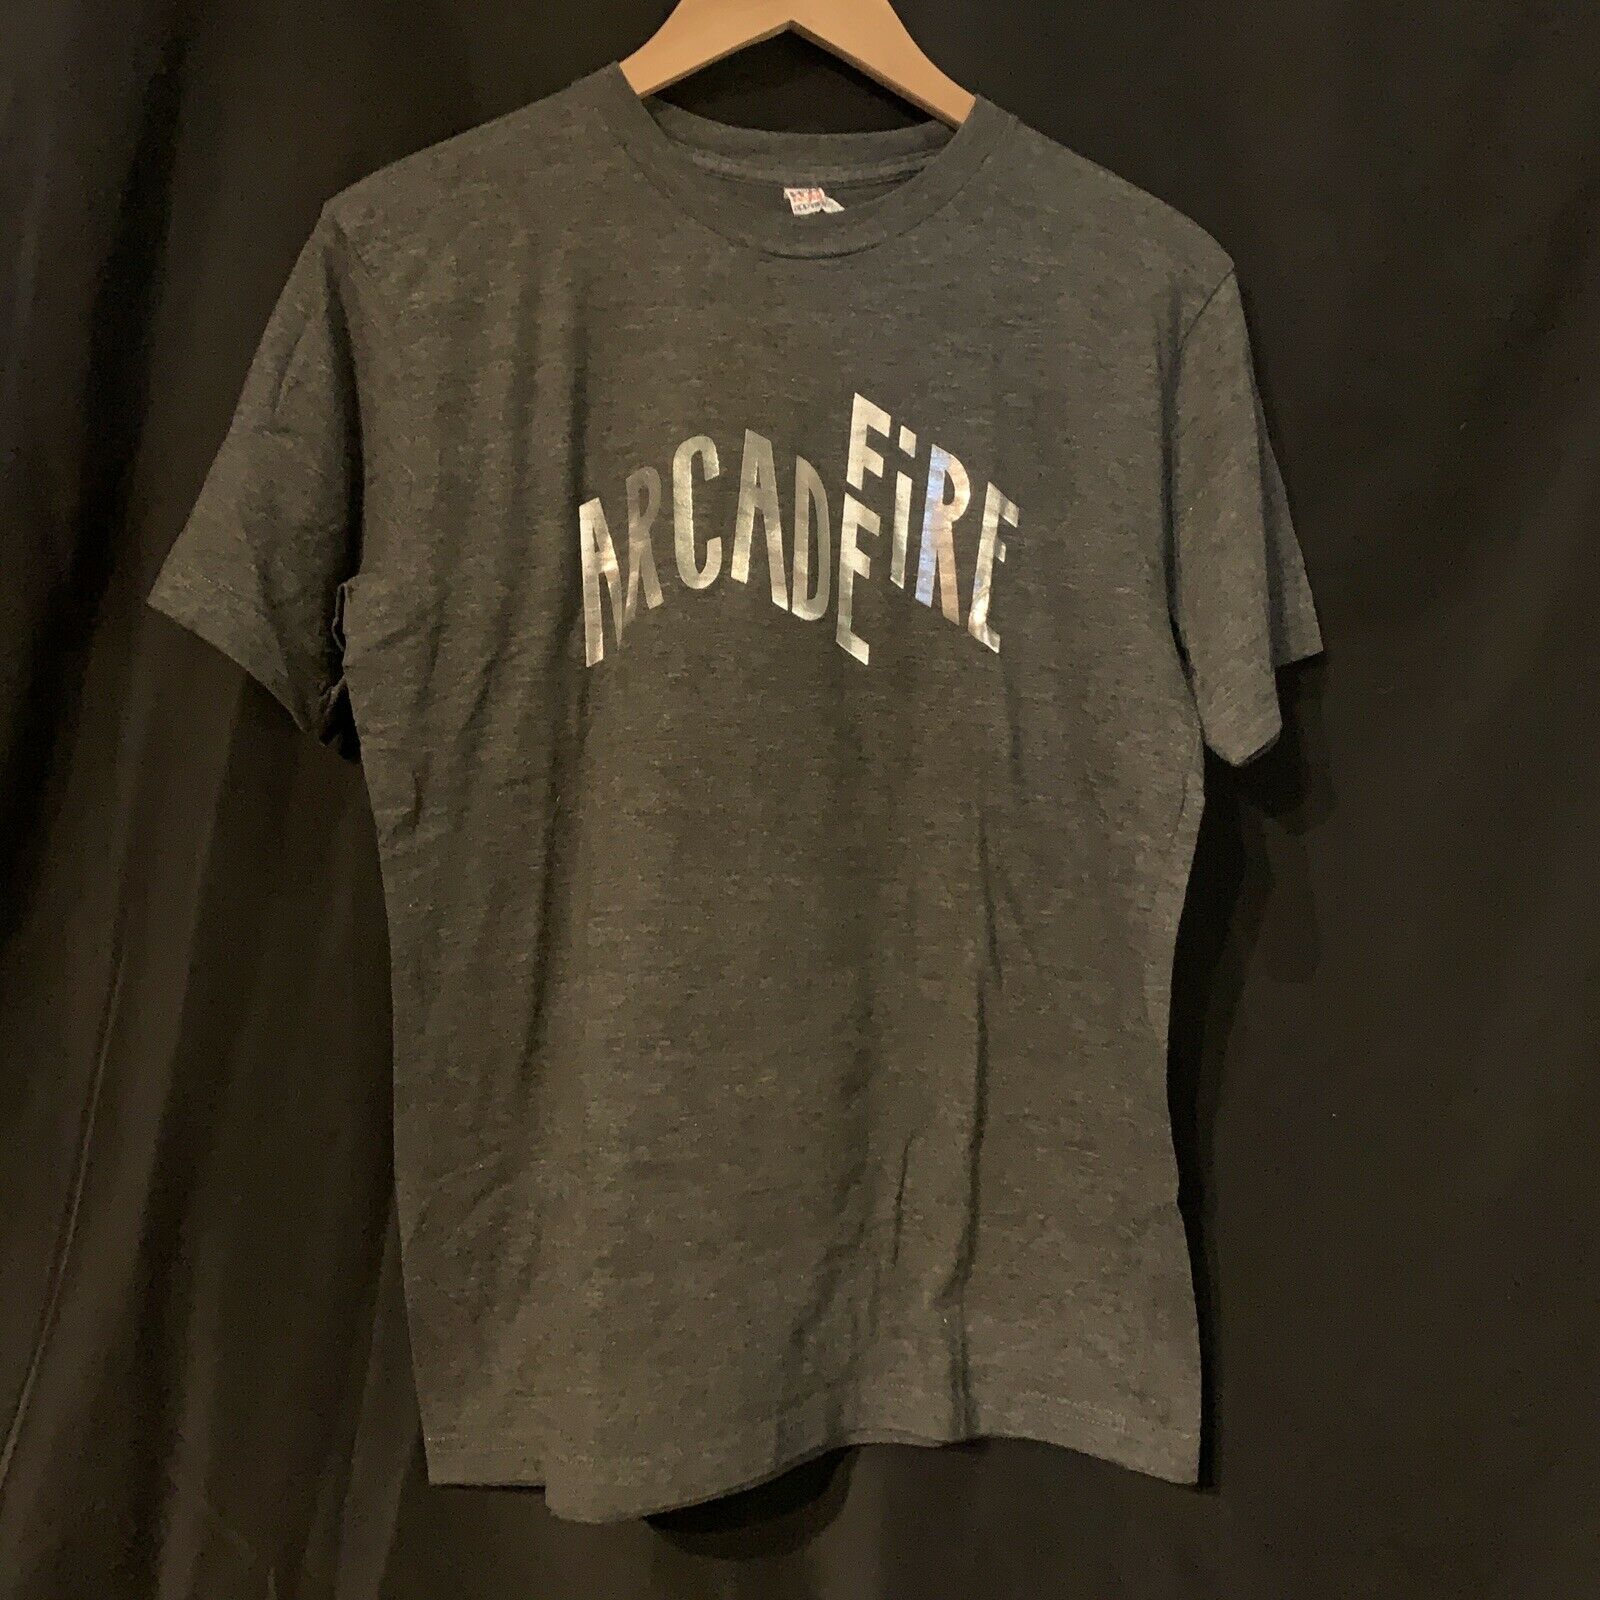 2014 Arcade Fire Reflektor Tour T Shirt Adult Sz M Mens S/s Grey Used Concert